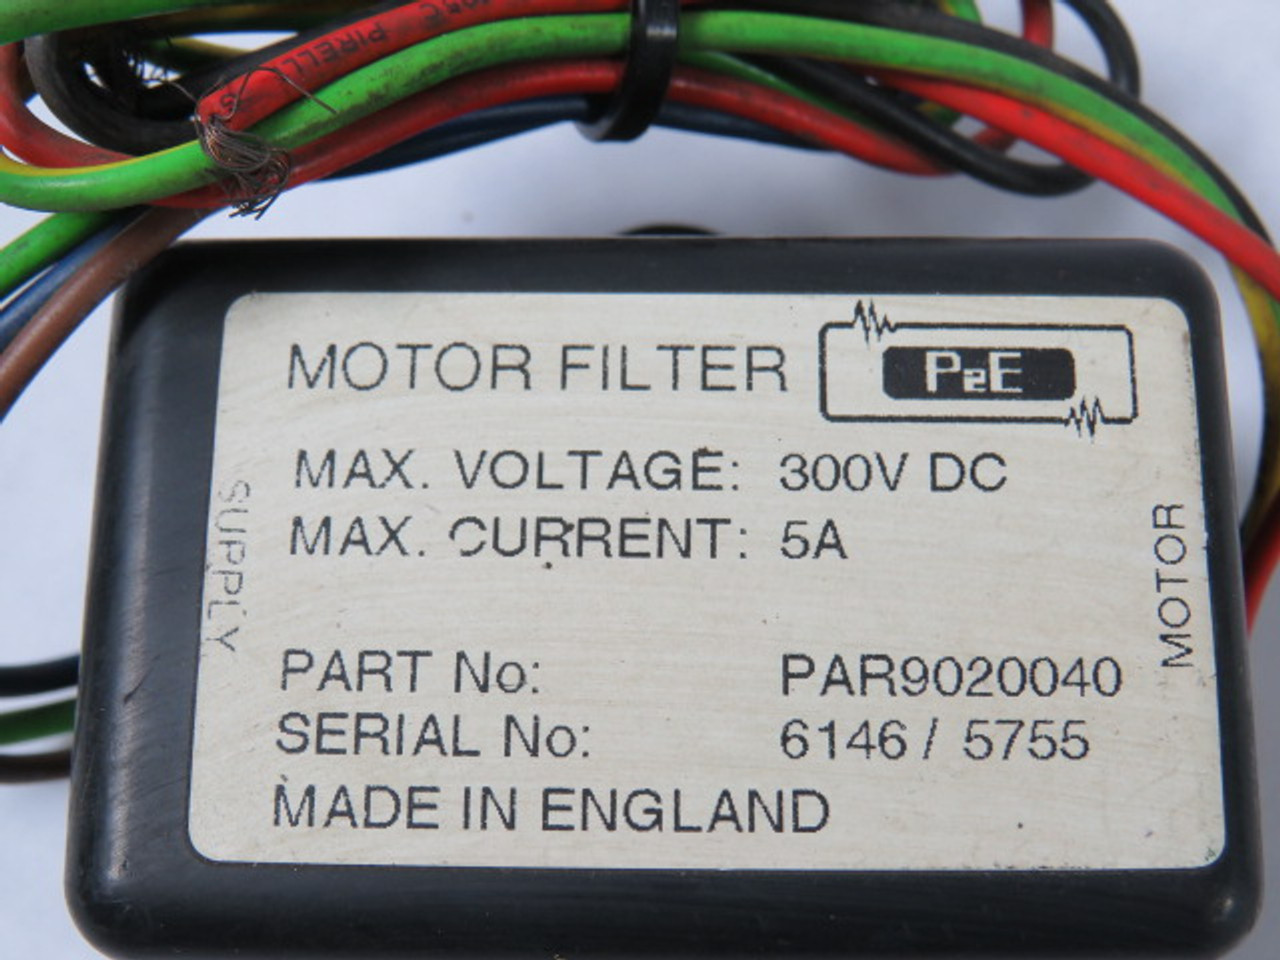 P&E PAR9020040 Motor Filter 5A 300VDC USED